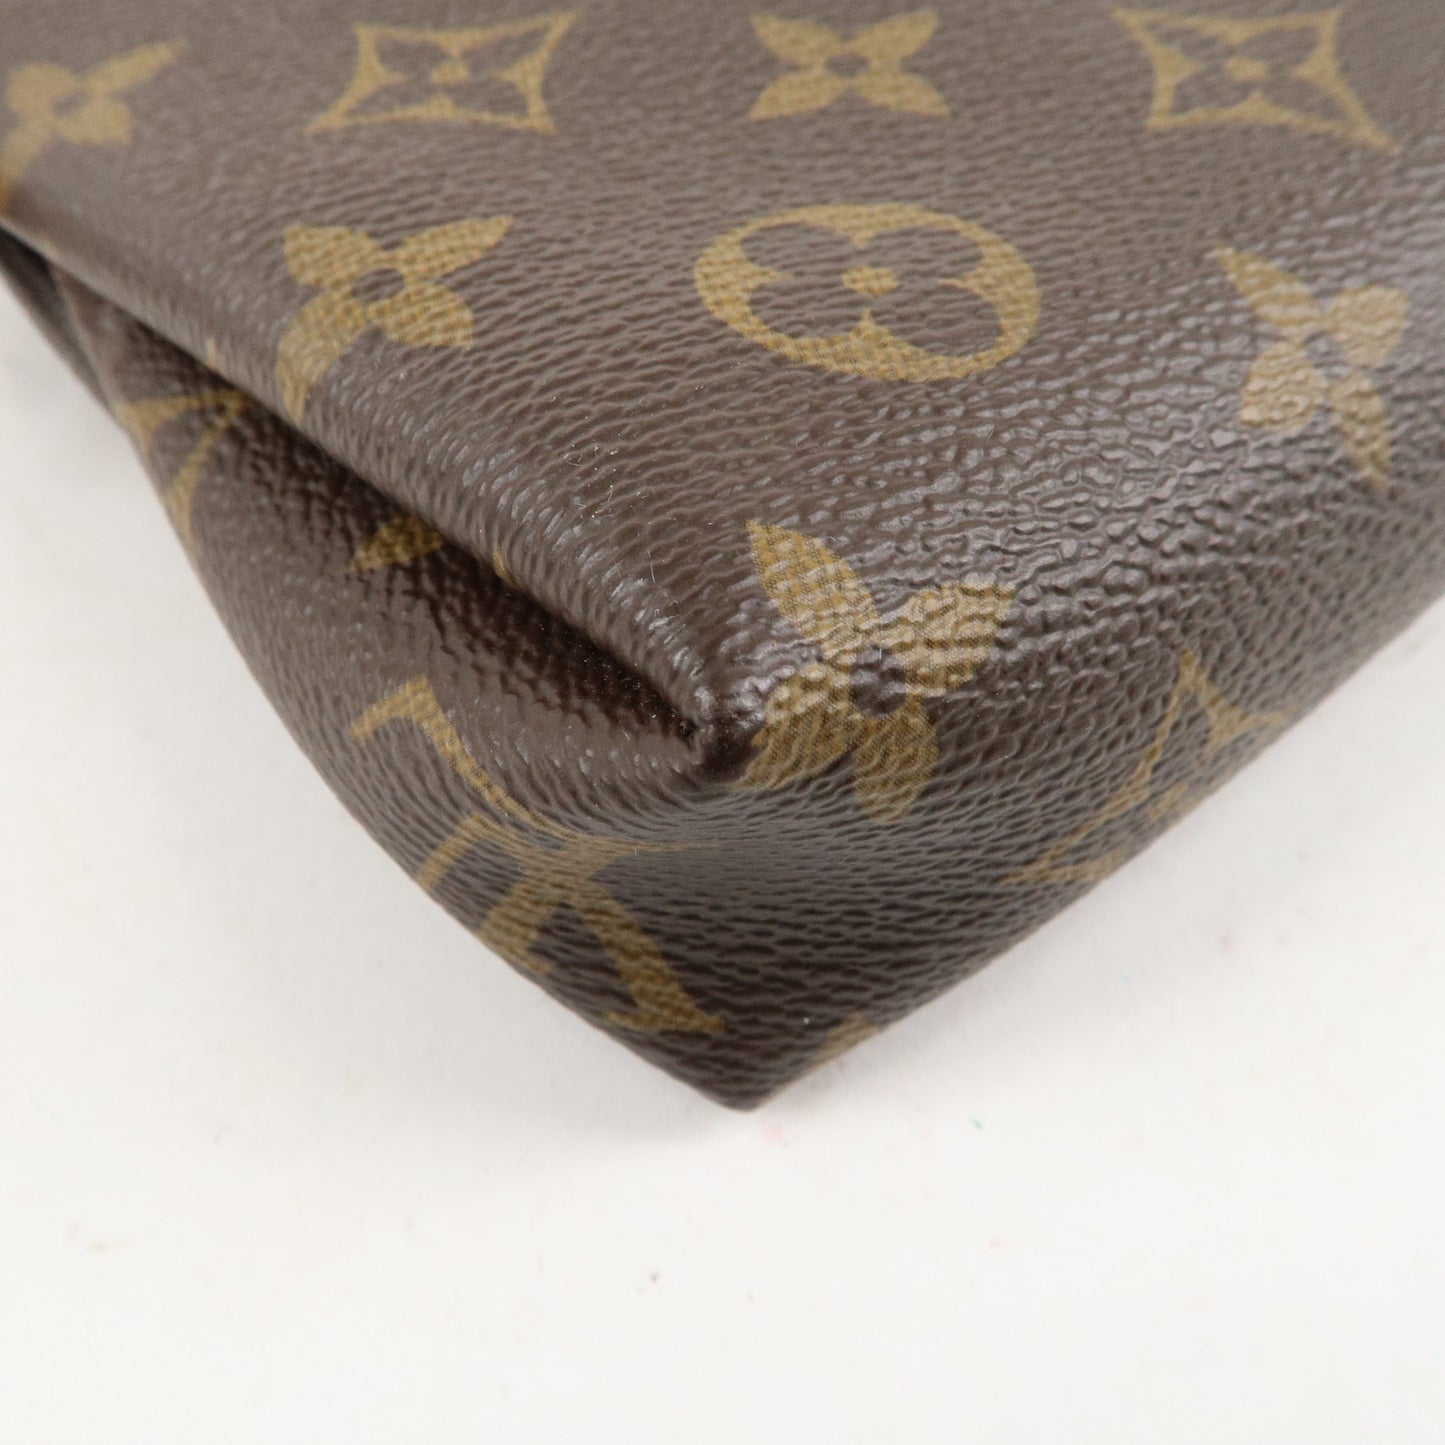 Louis Vuitton Monogram Pallas Clutch 2Way Shoulder Bag Pink M44037